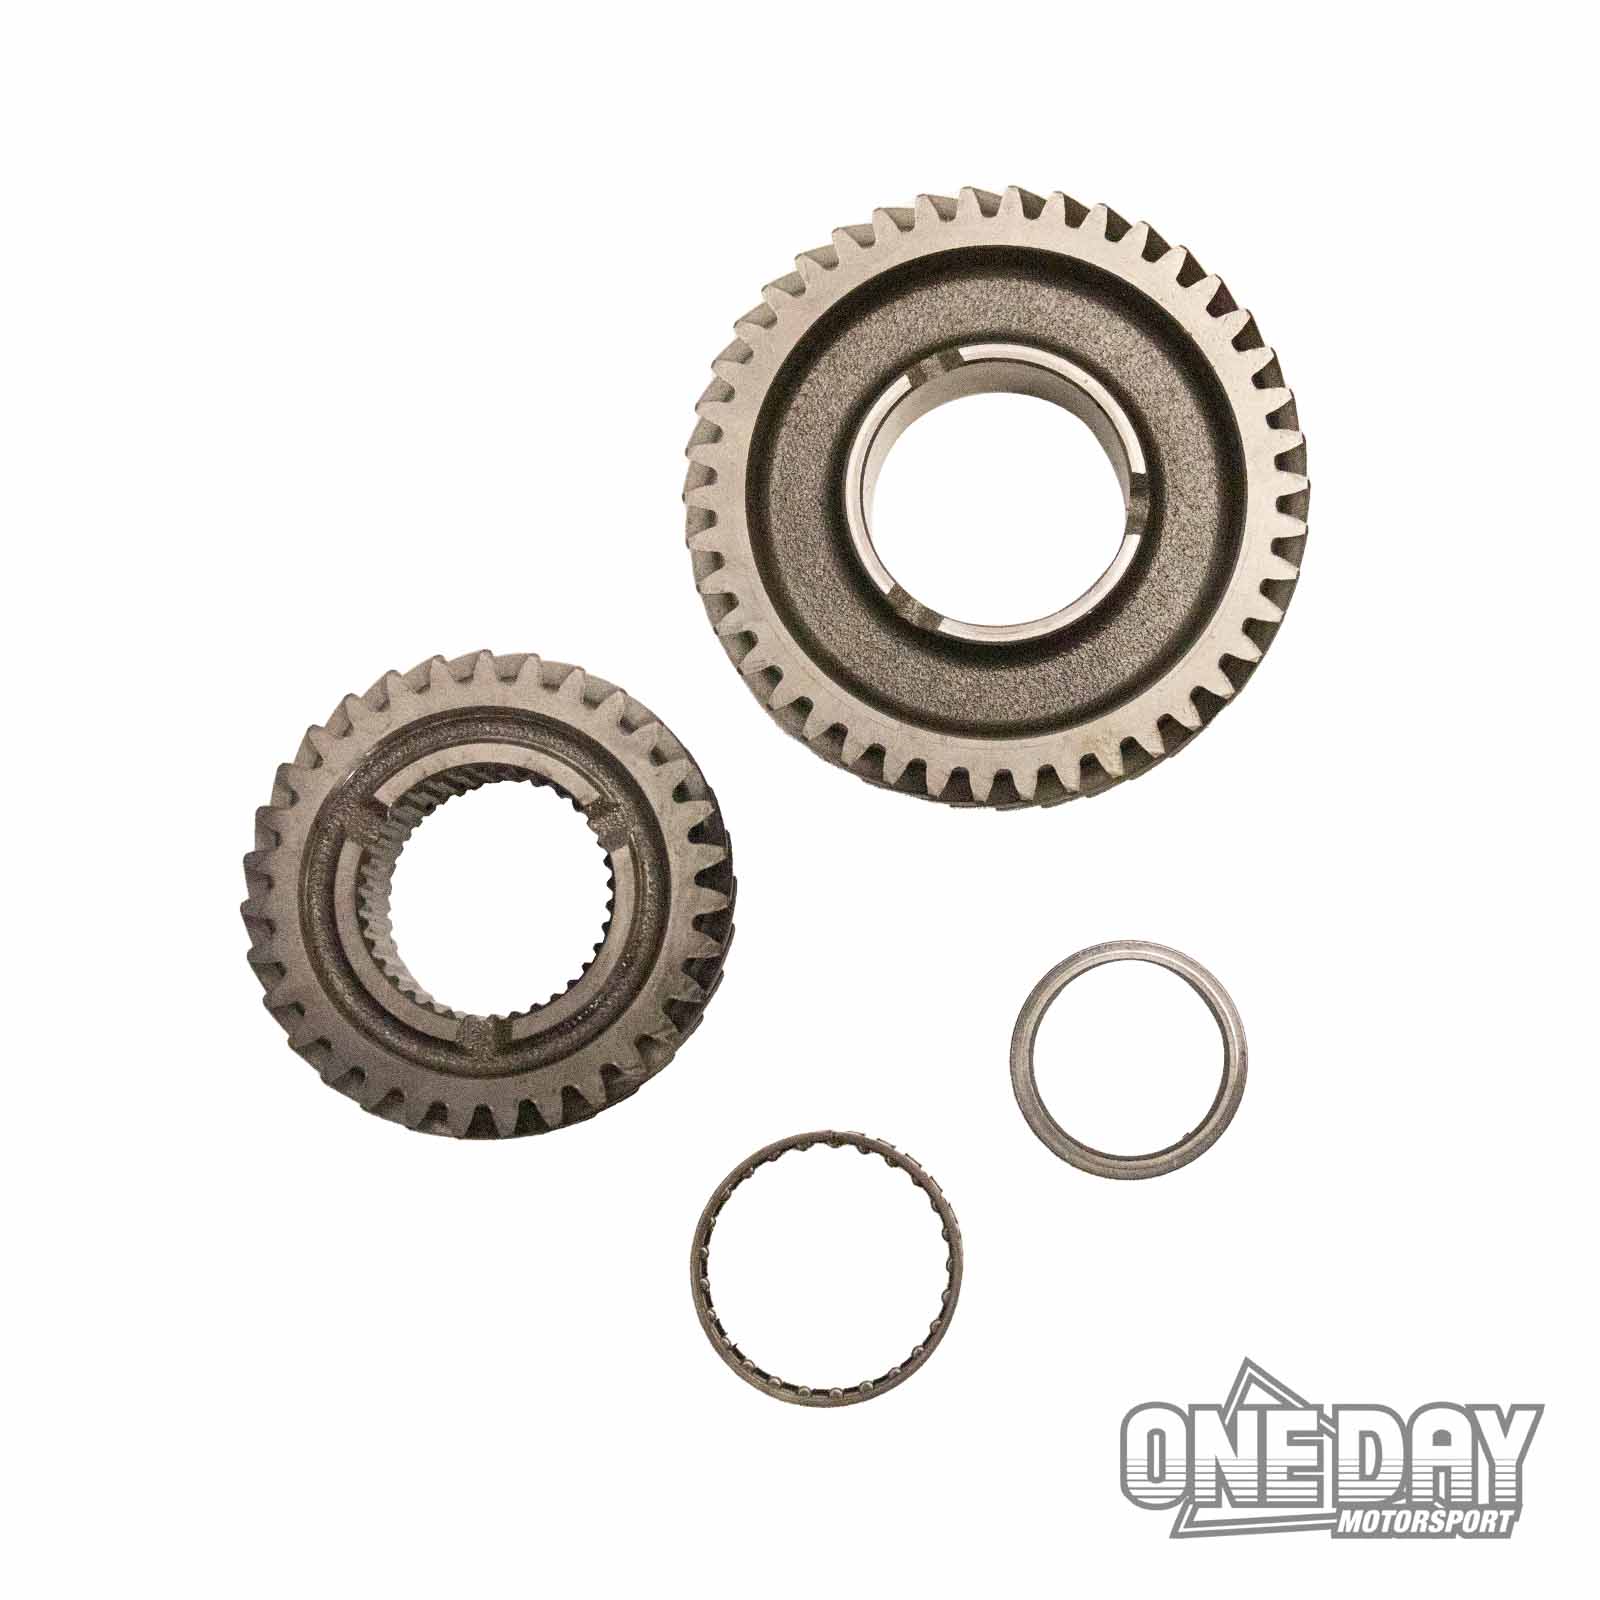 K Series Used Gears – OneDayMotorsport